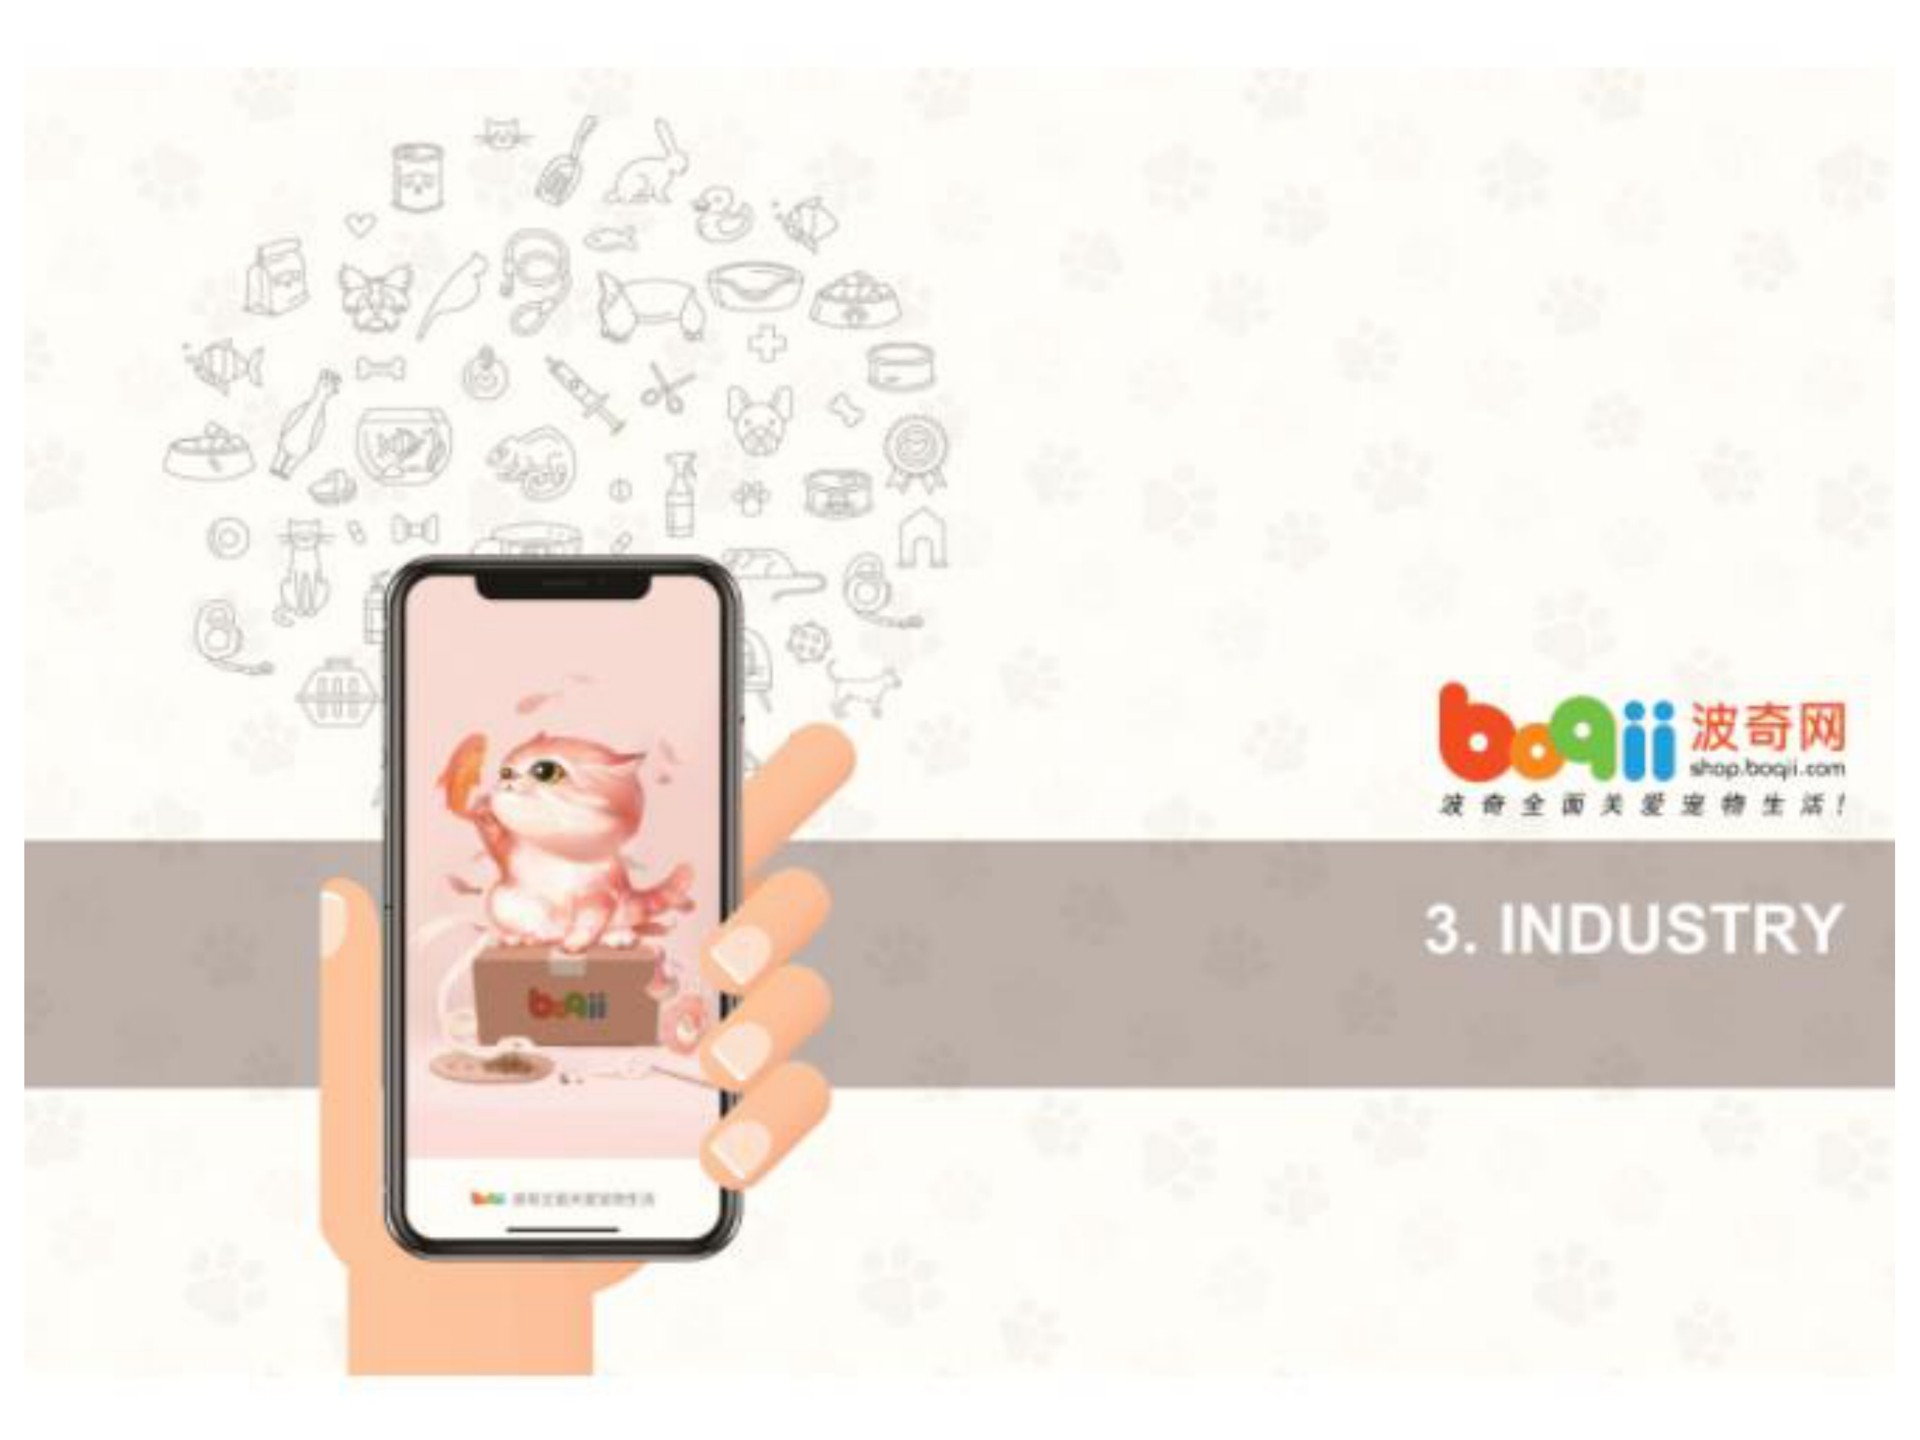 industry | Boqii Holding